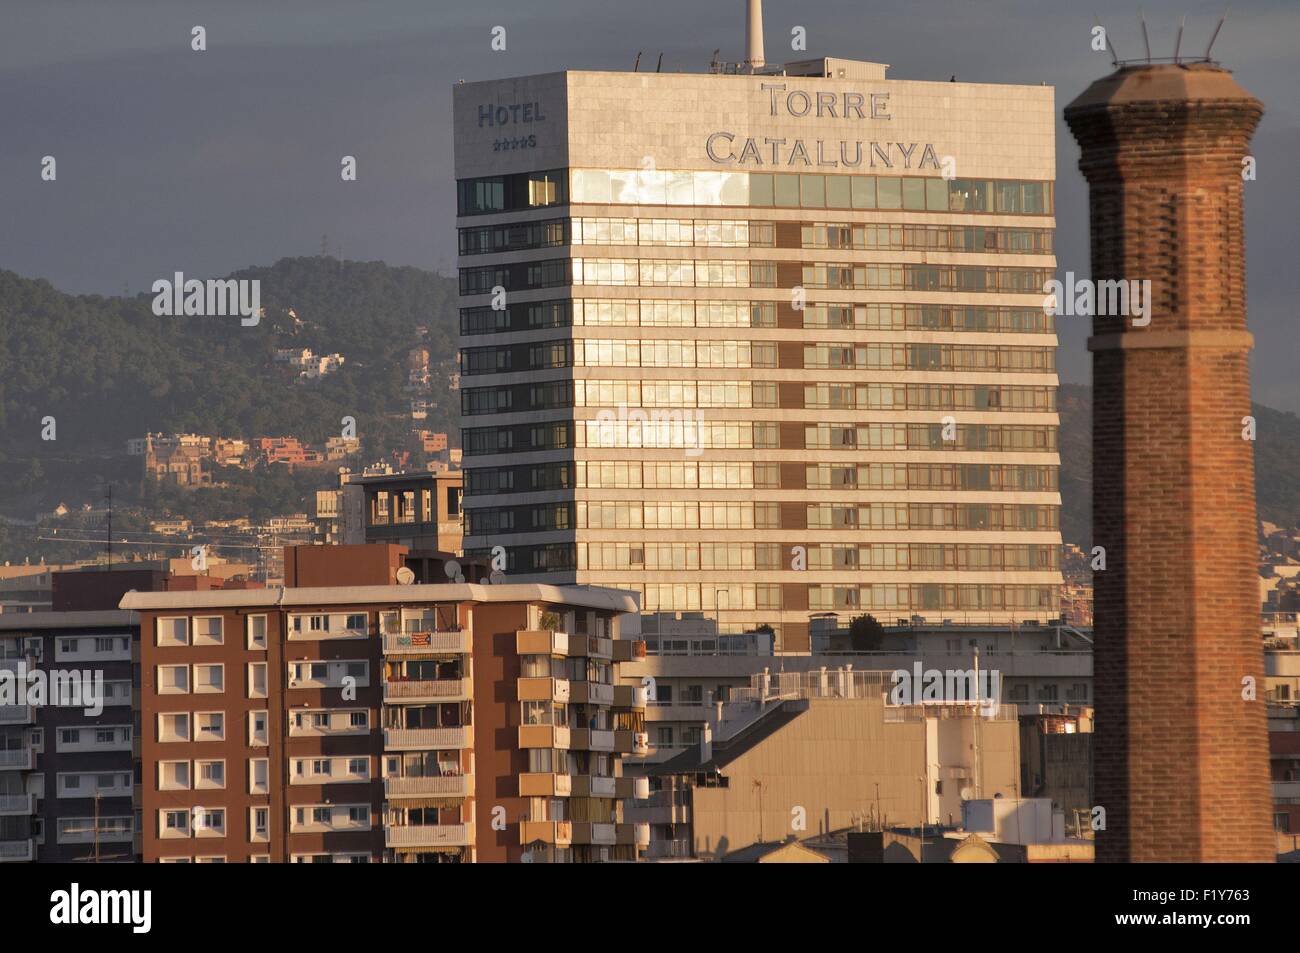 Spain, Catalonia, Barcelona, Sants-Montjuic district, Gran Hotel Torre Catalunya Stock Photo